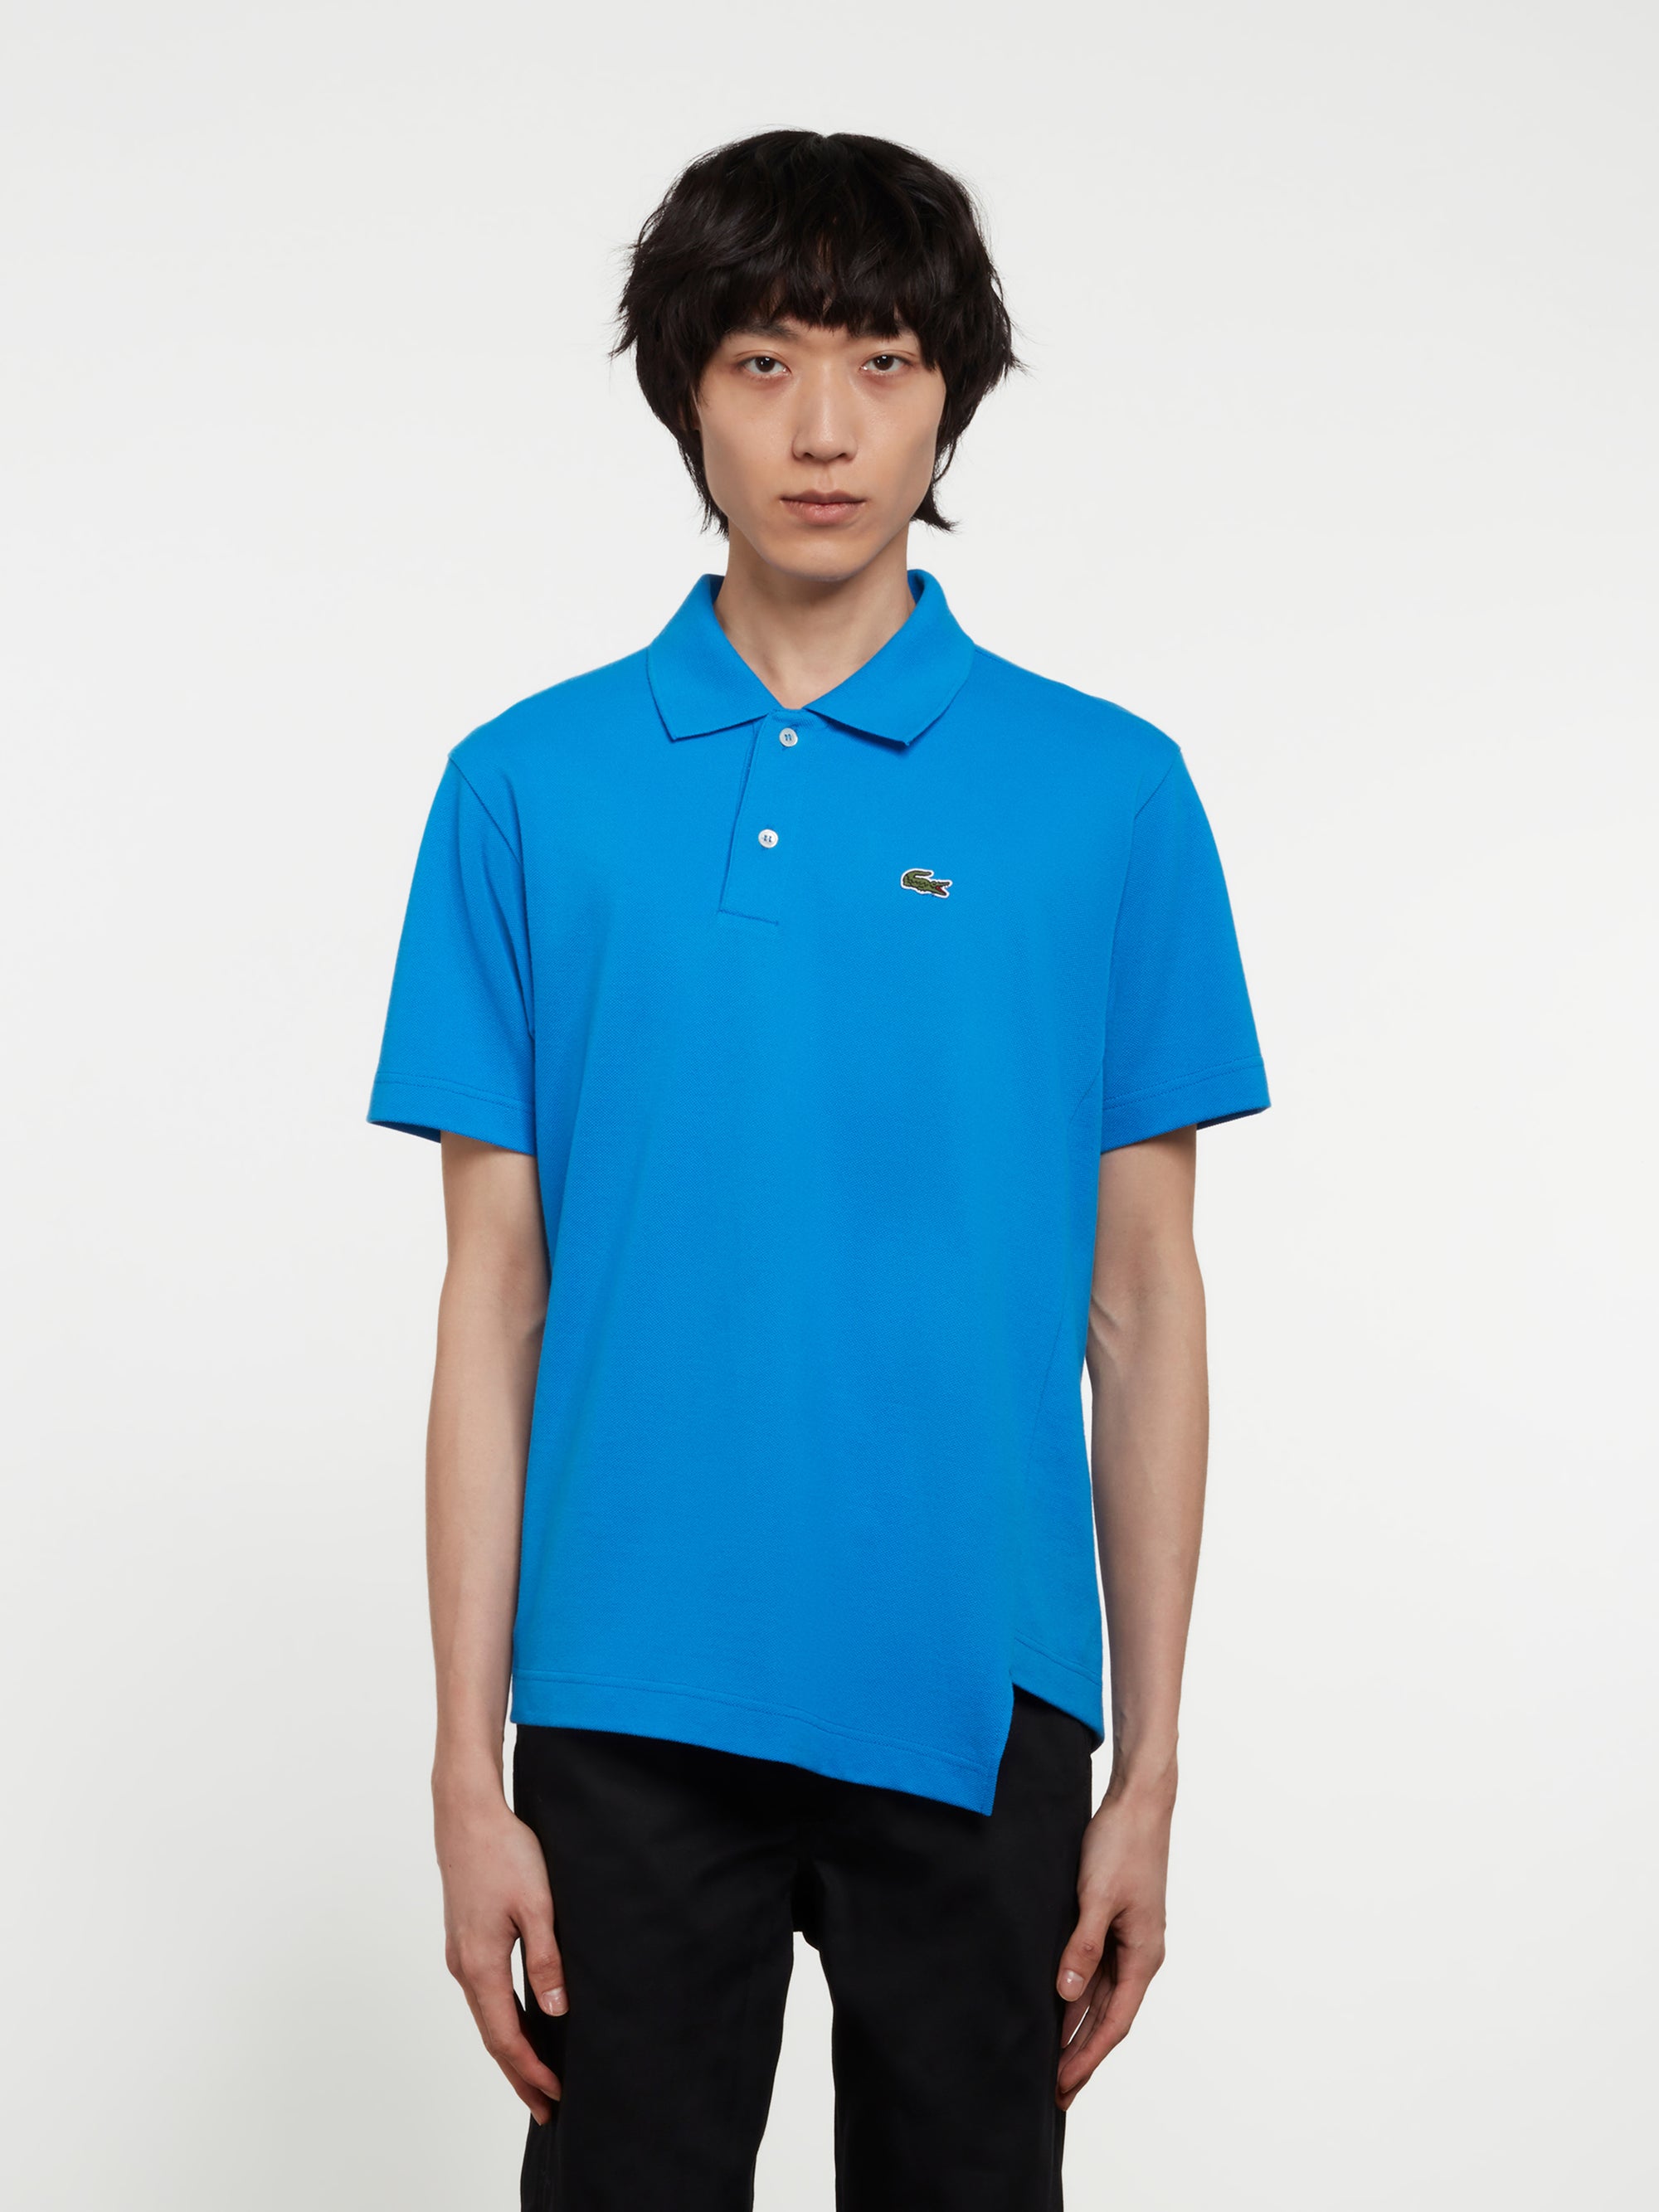 CDG Shirt - Lacoste Men’s Polo Shirt - (Blue) view 1